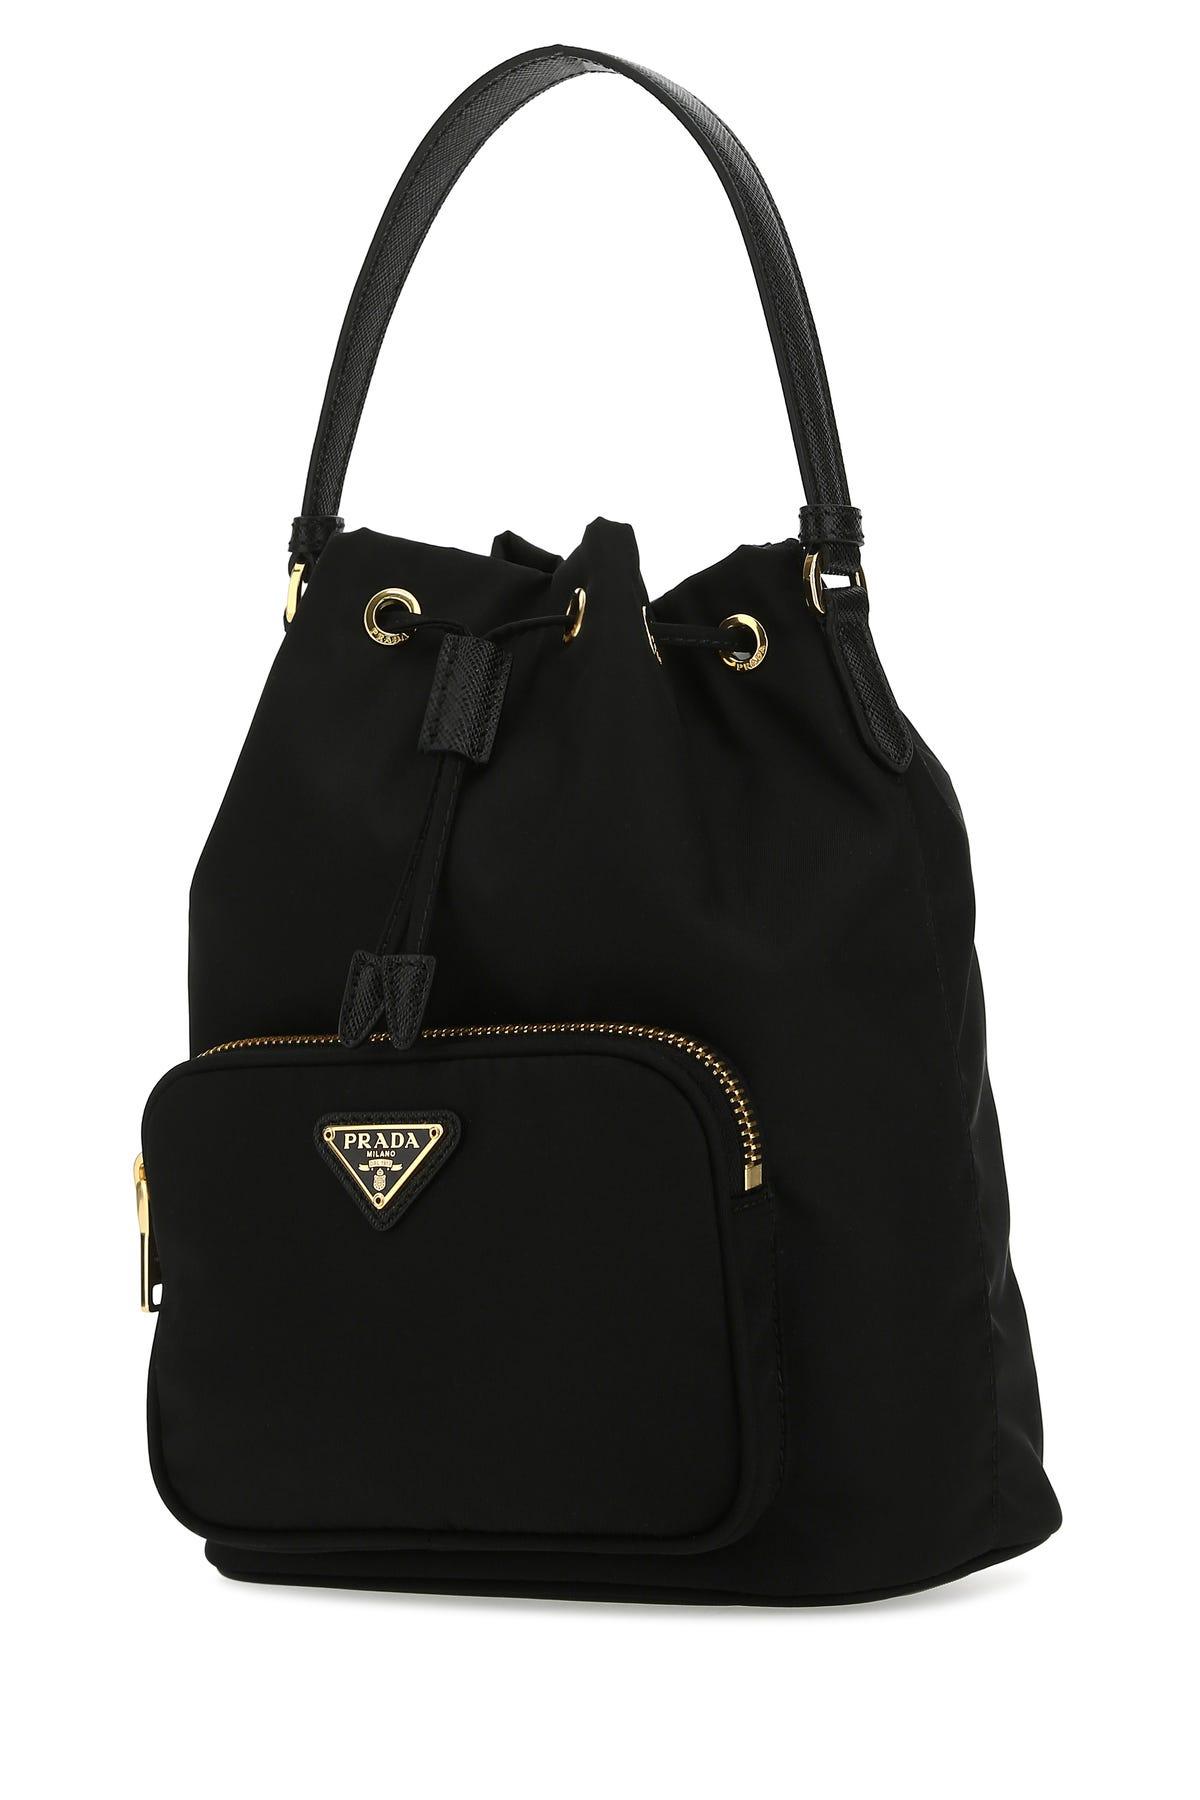 Prada Black Nylon Bucket Bag | Lyst